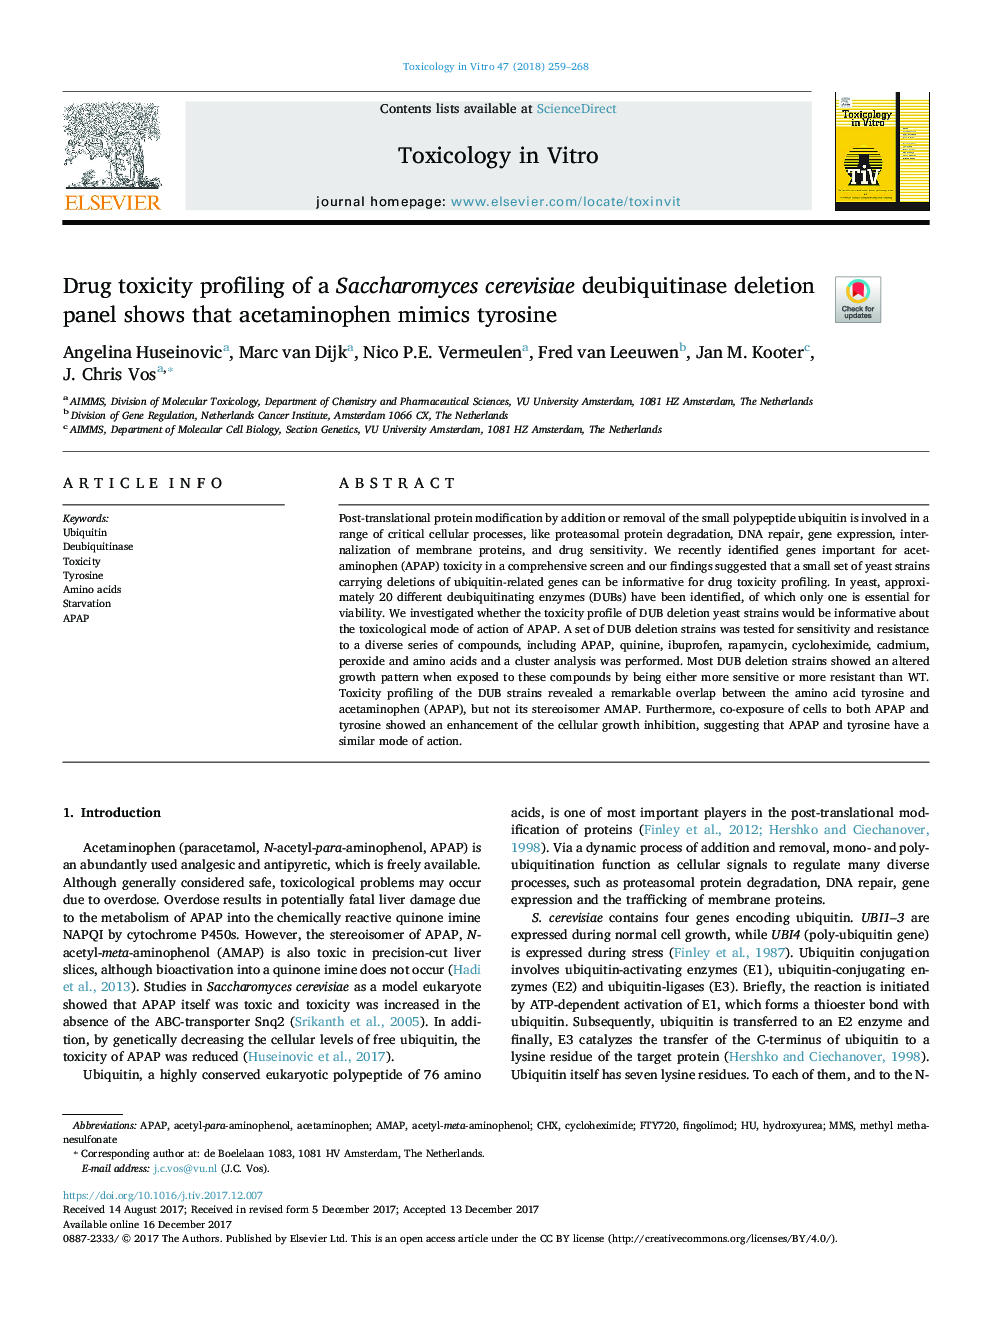 Drug toxicity profiling of a Saccharomyces cerevisiae deubiquitinase deletion panel shows that acetaminophen mimics tyrosine